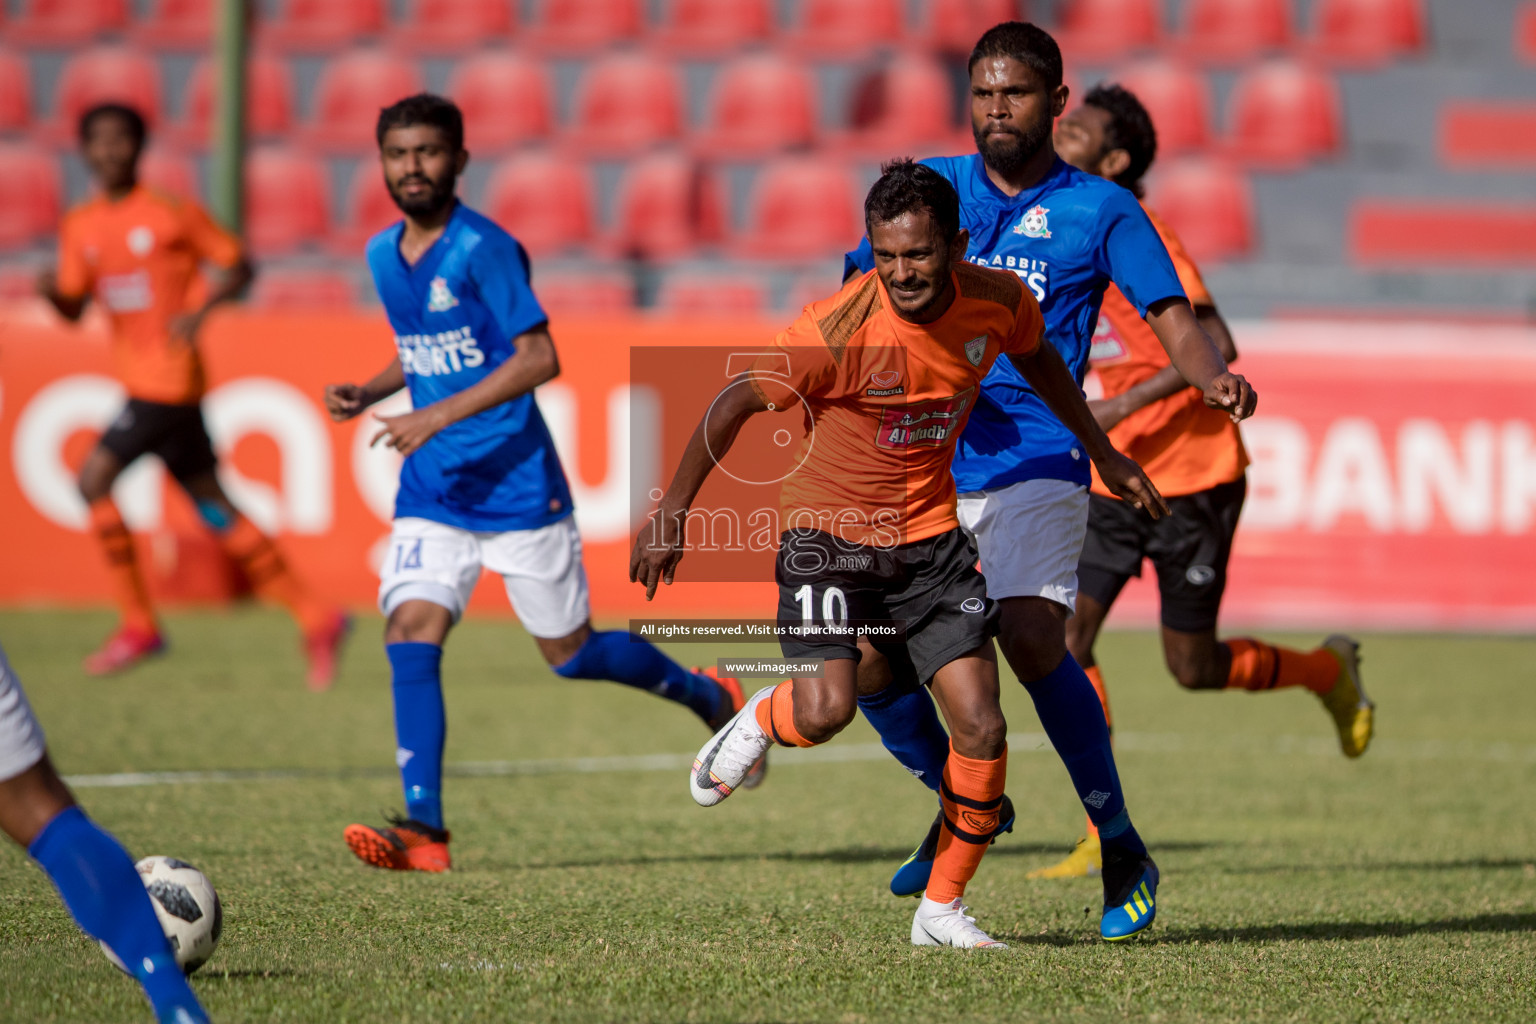 Club Eagles vs Nilandhoo in Dhiraagu Dhivehi Premier League 2019 held in Male', Maldives on 29th June 2019 Photos: Ismail Thoriq/images.mv